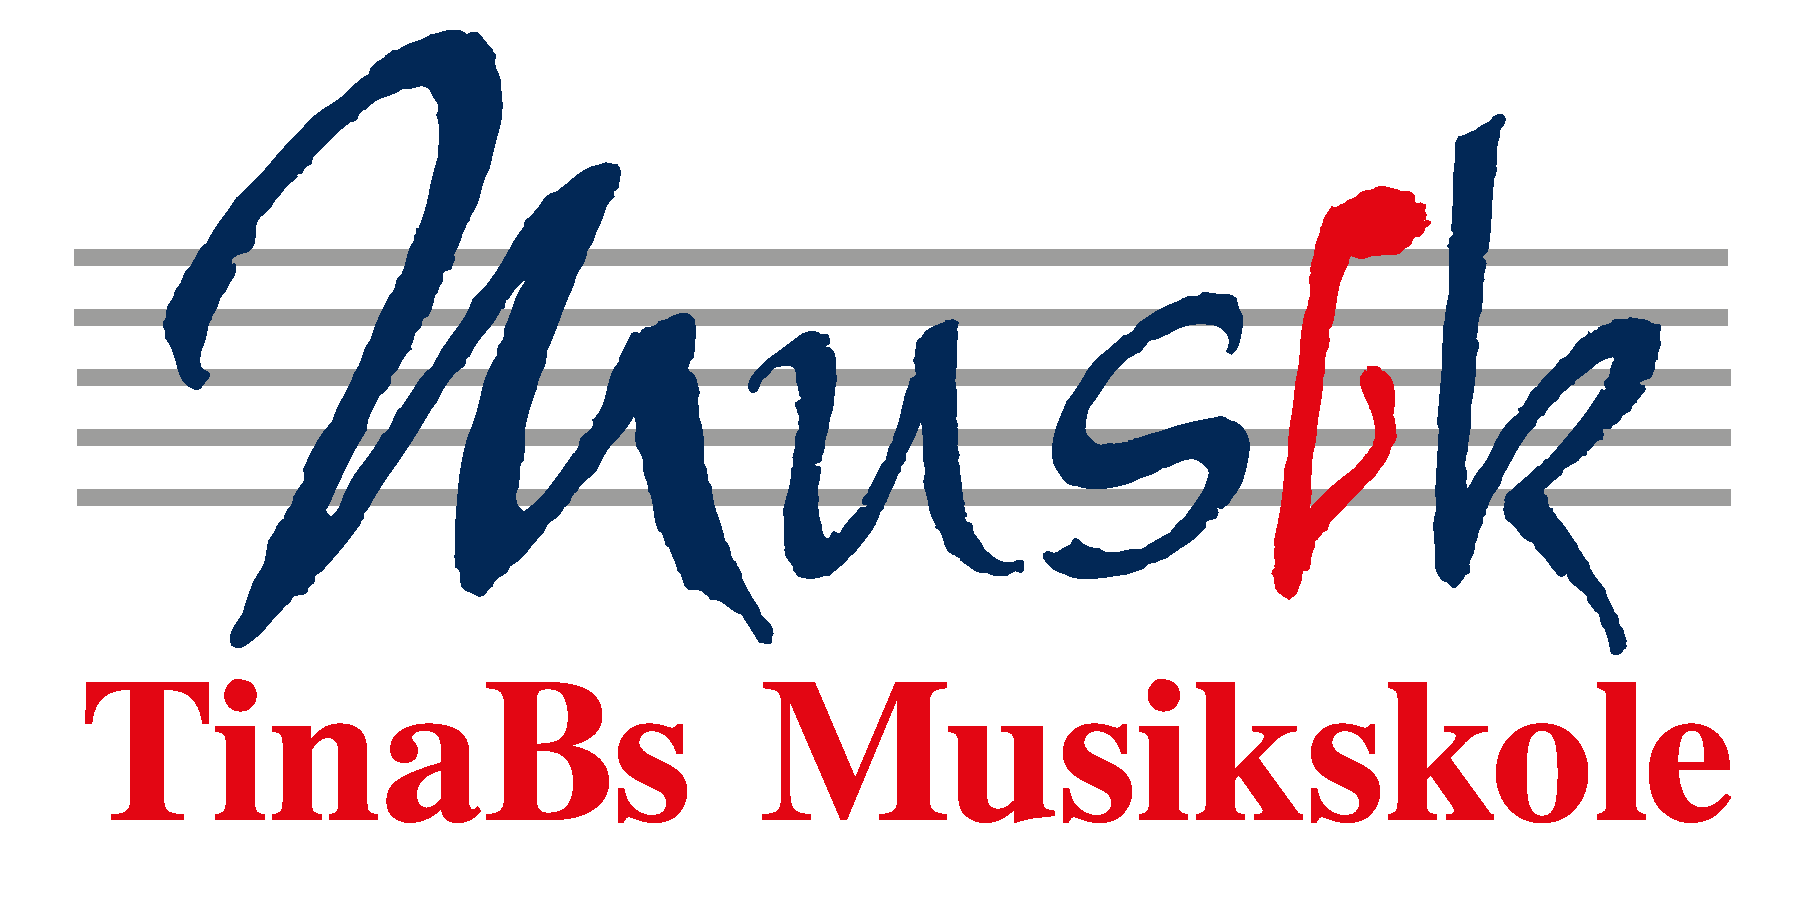 TinaBs Musikskole logo